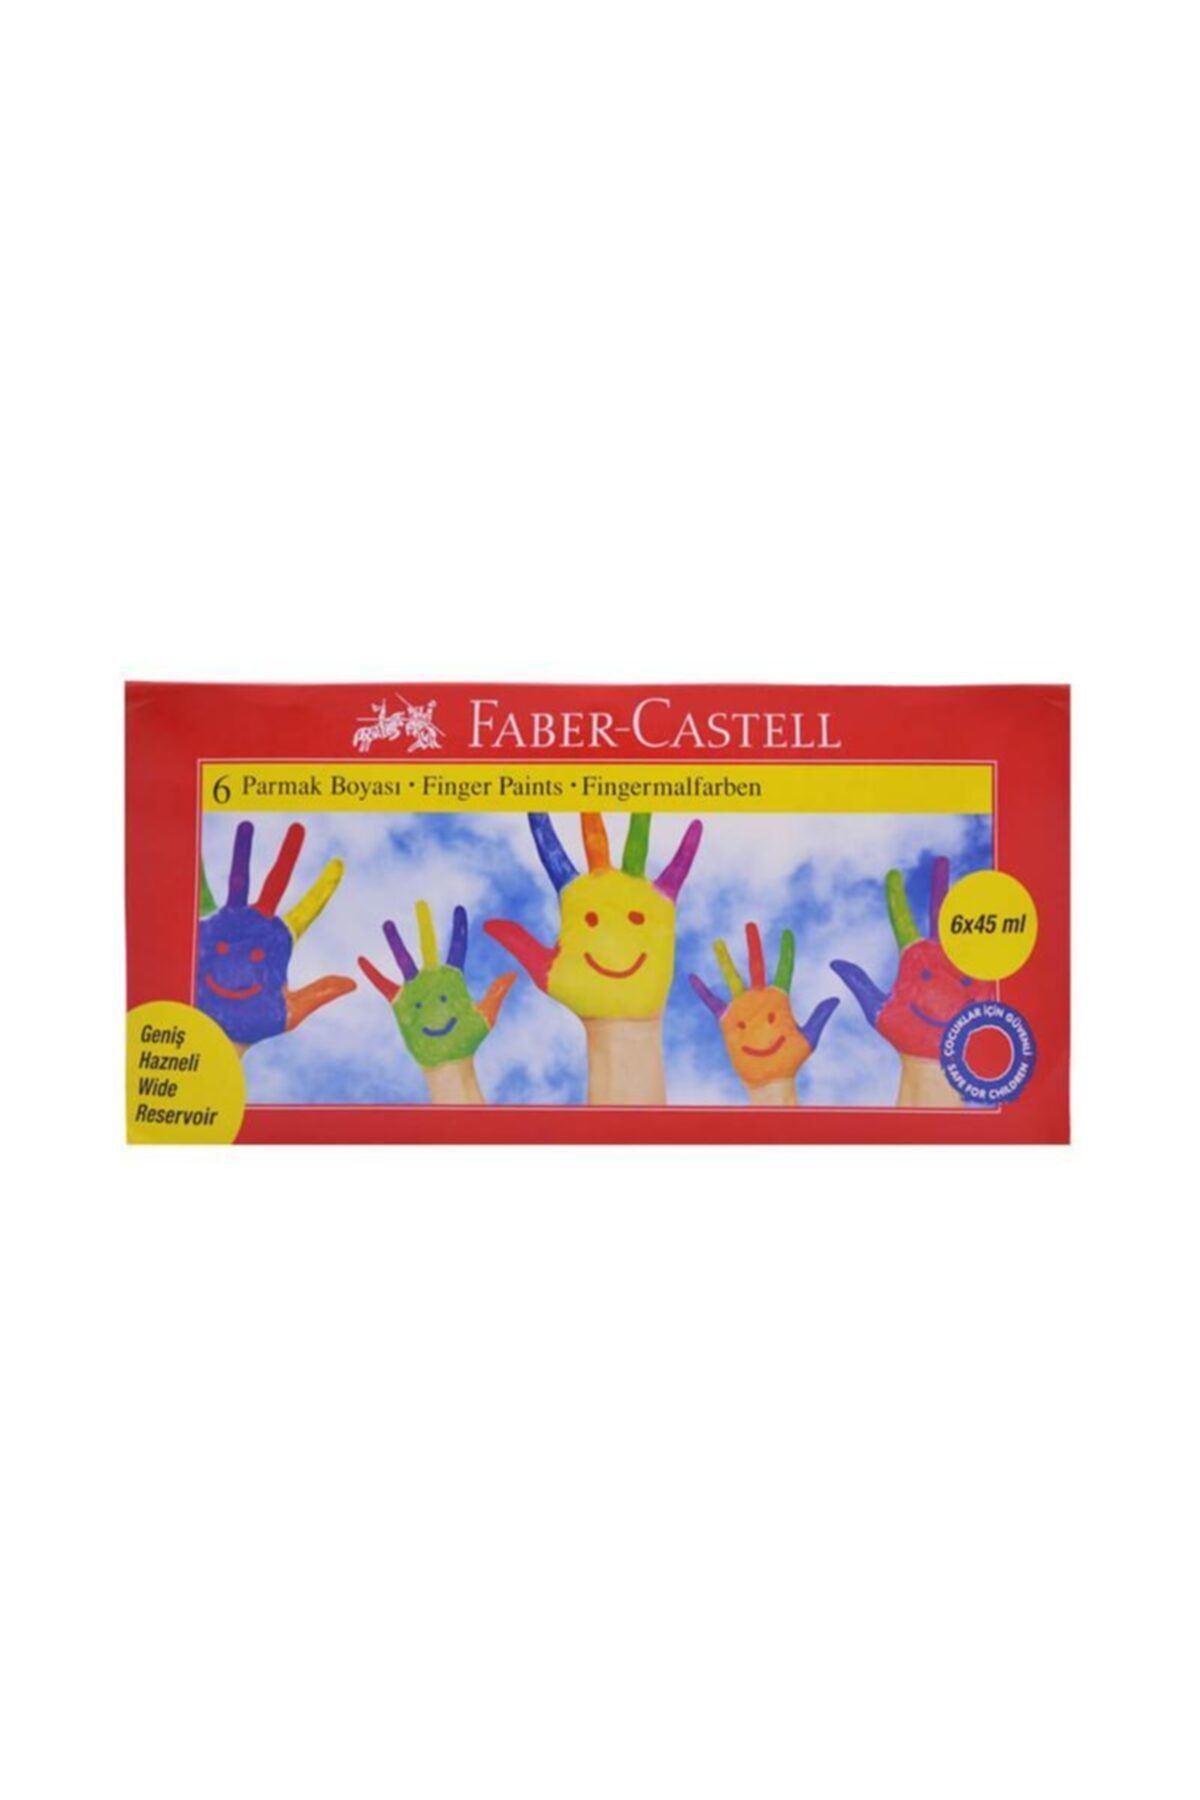 Faber Castell Parmak Boyası 6 Renk 45 ml 160422